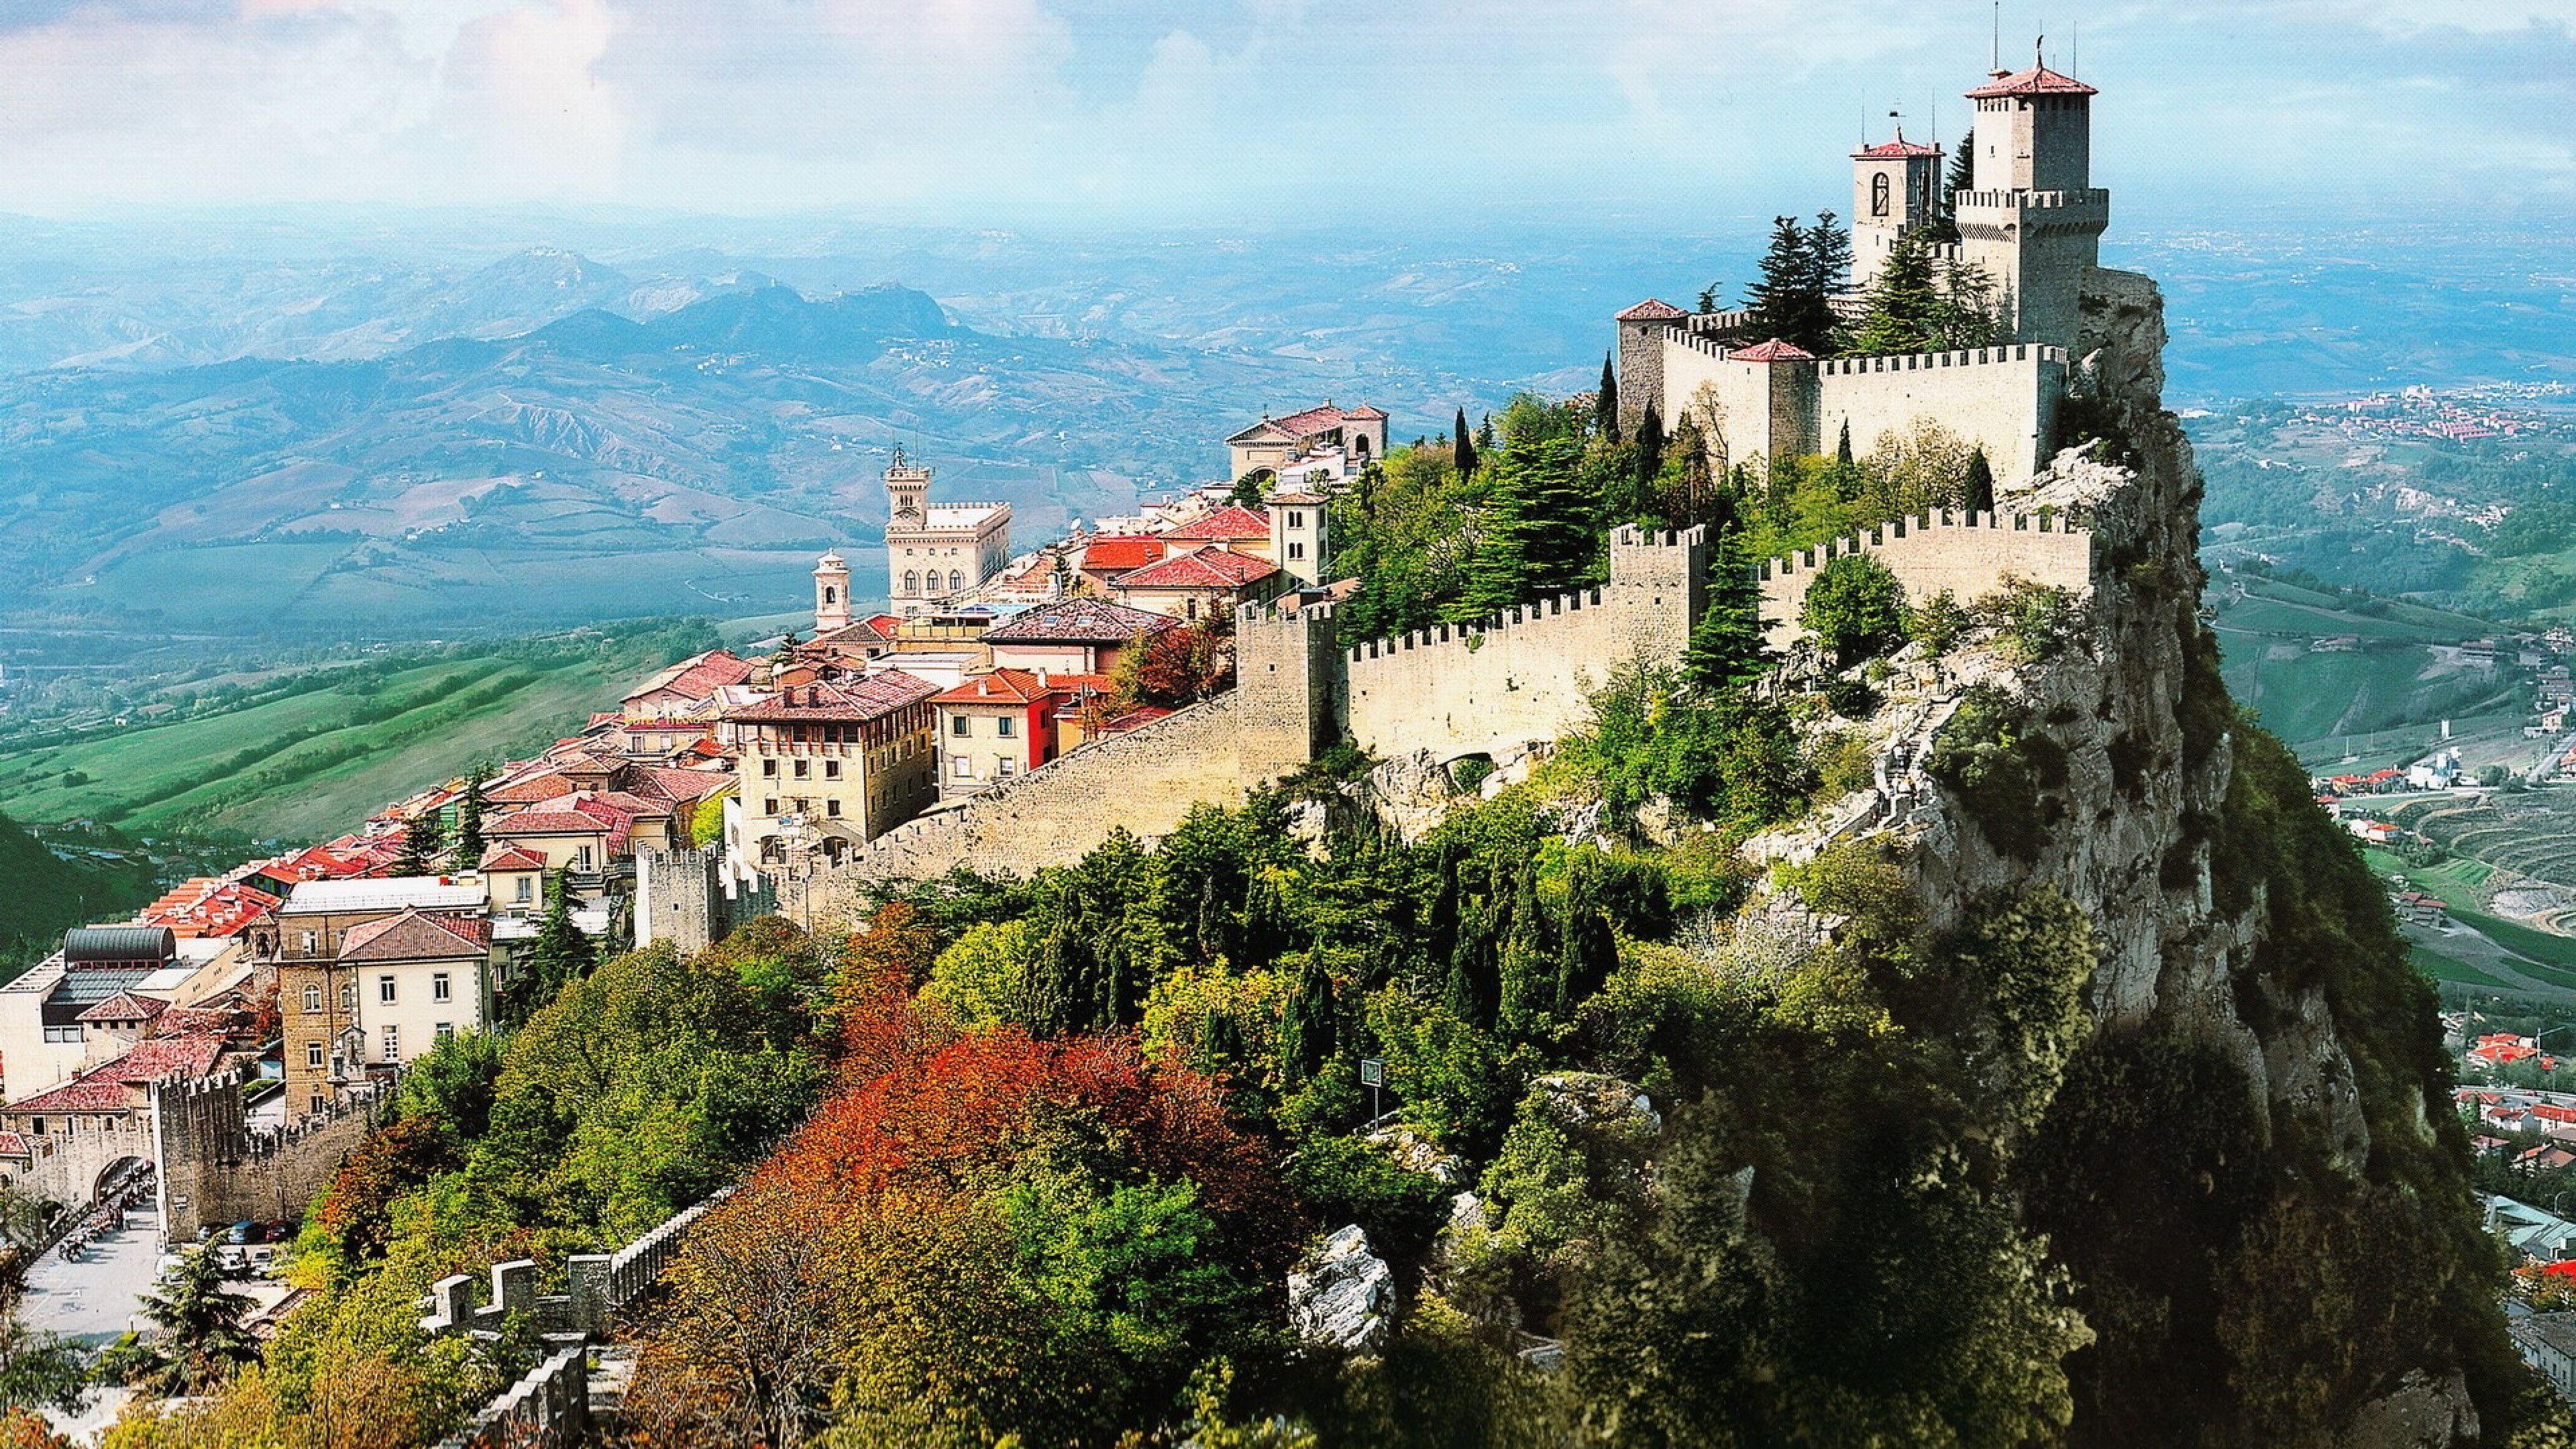 San Marino Wallpaper Image Photo Picture Background